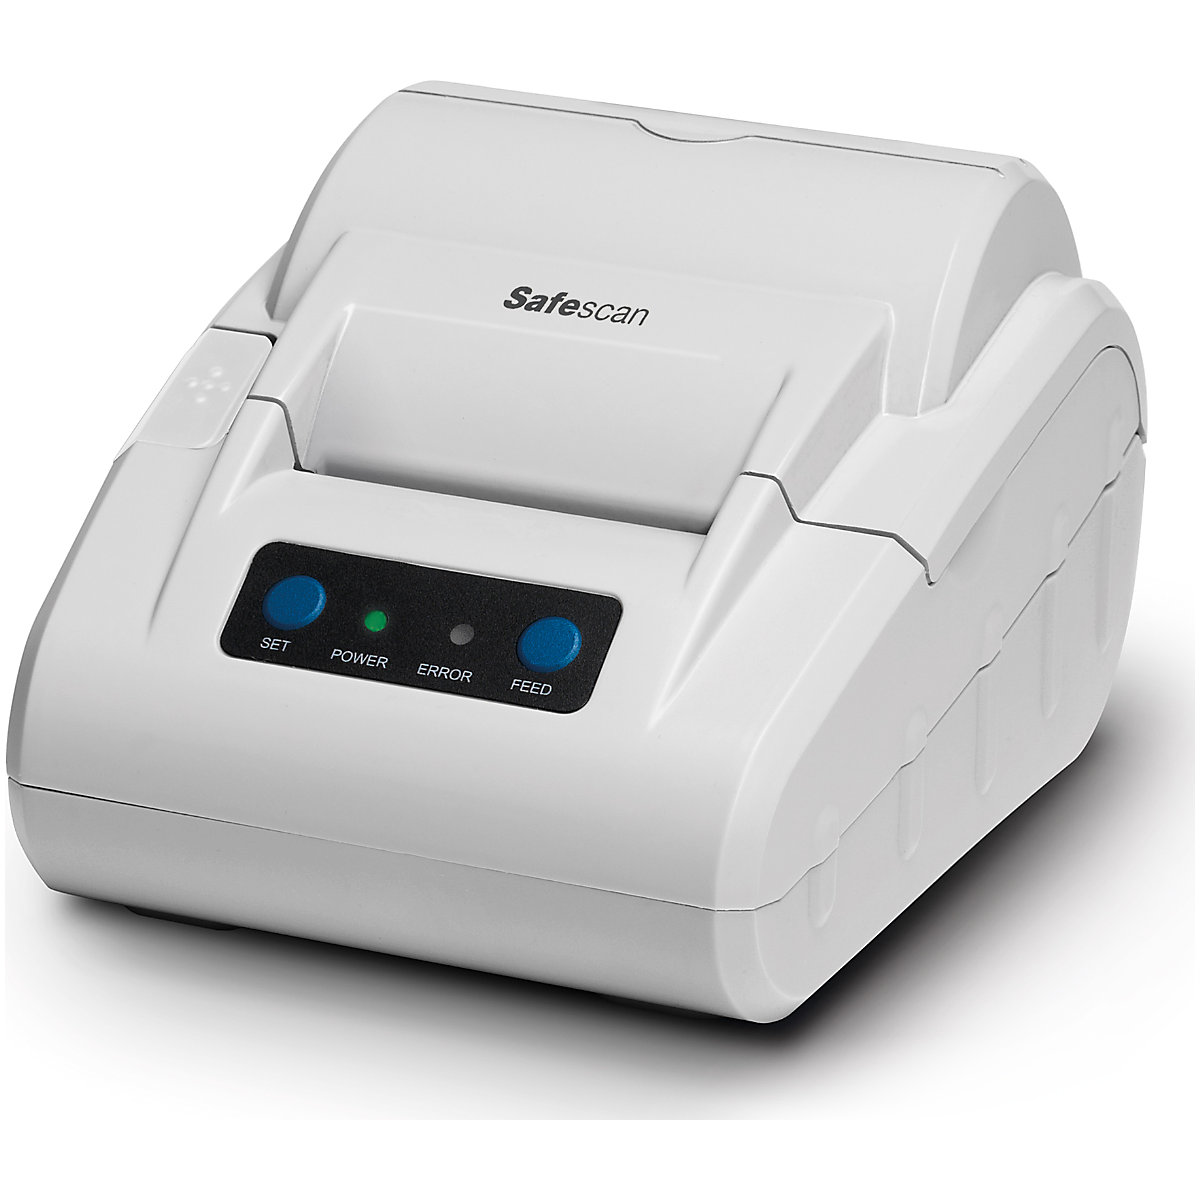 Thermal transfer printer – Safescan